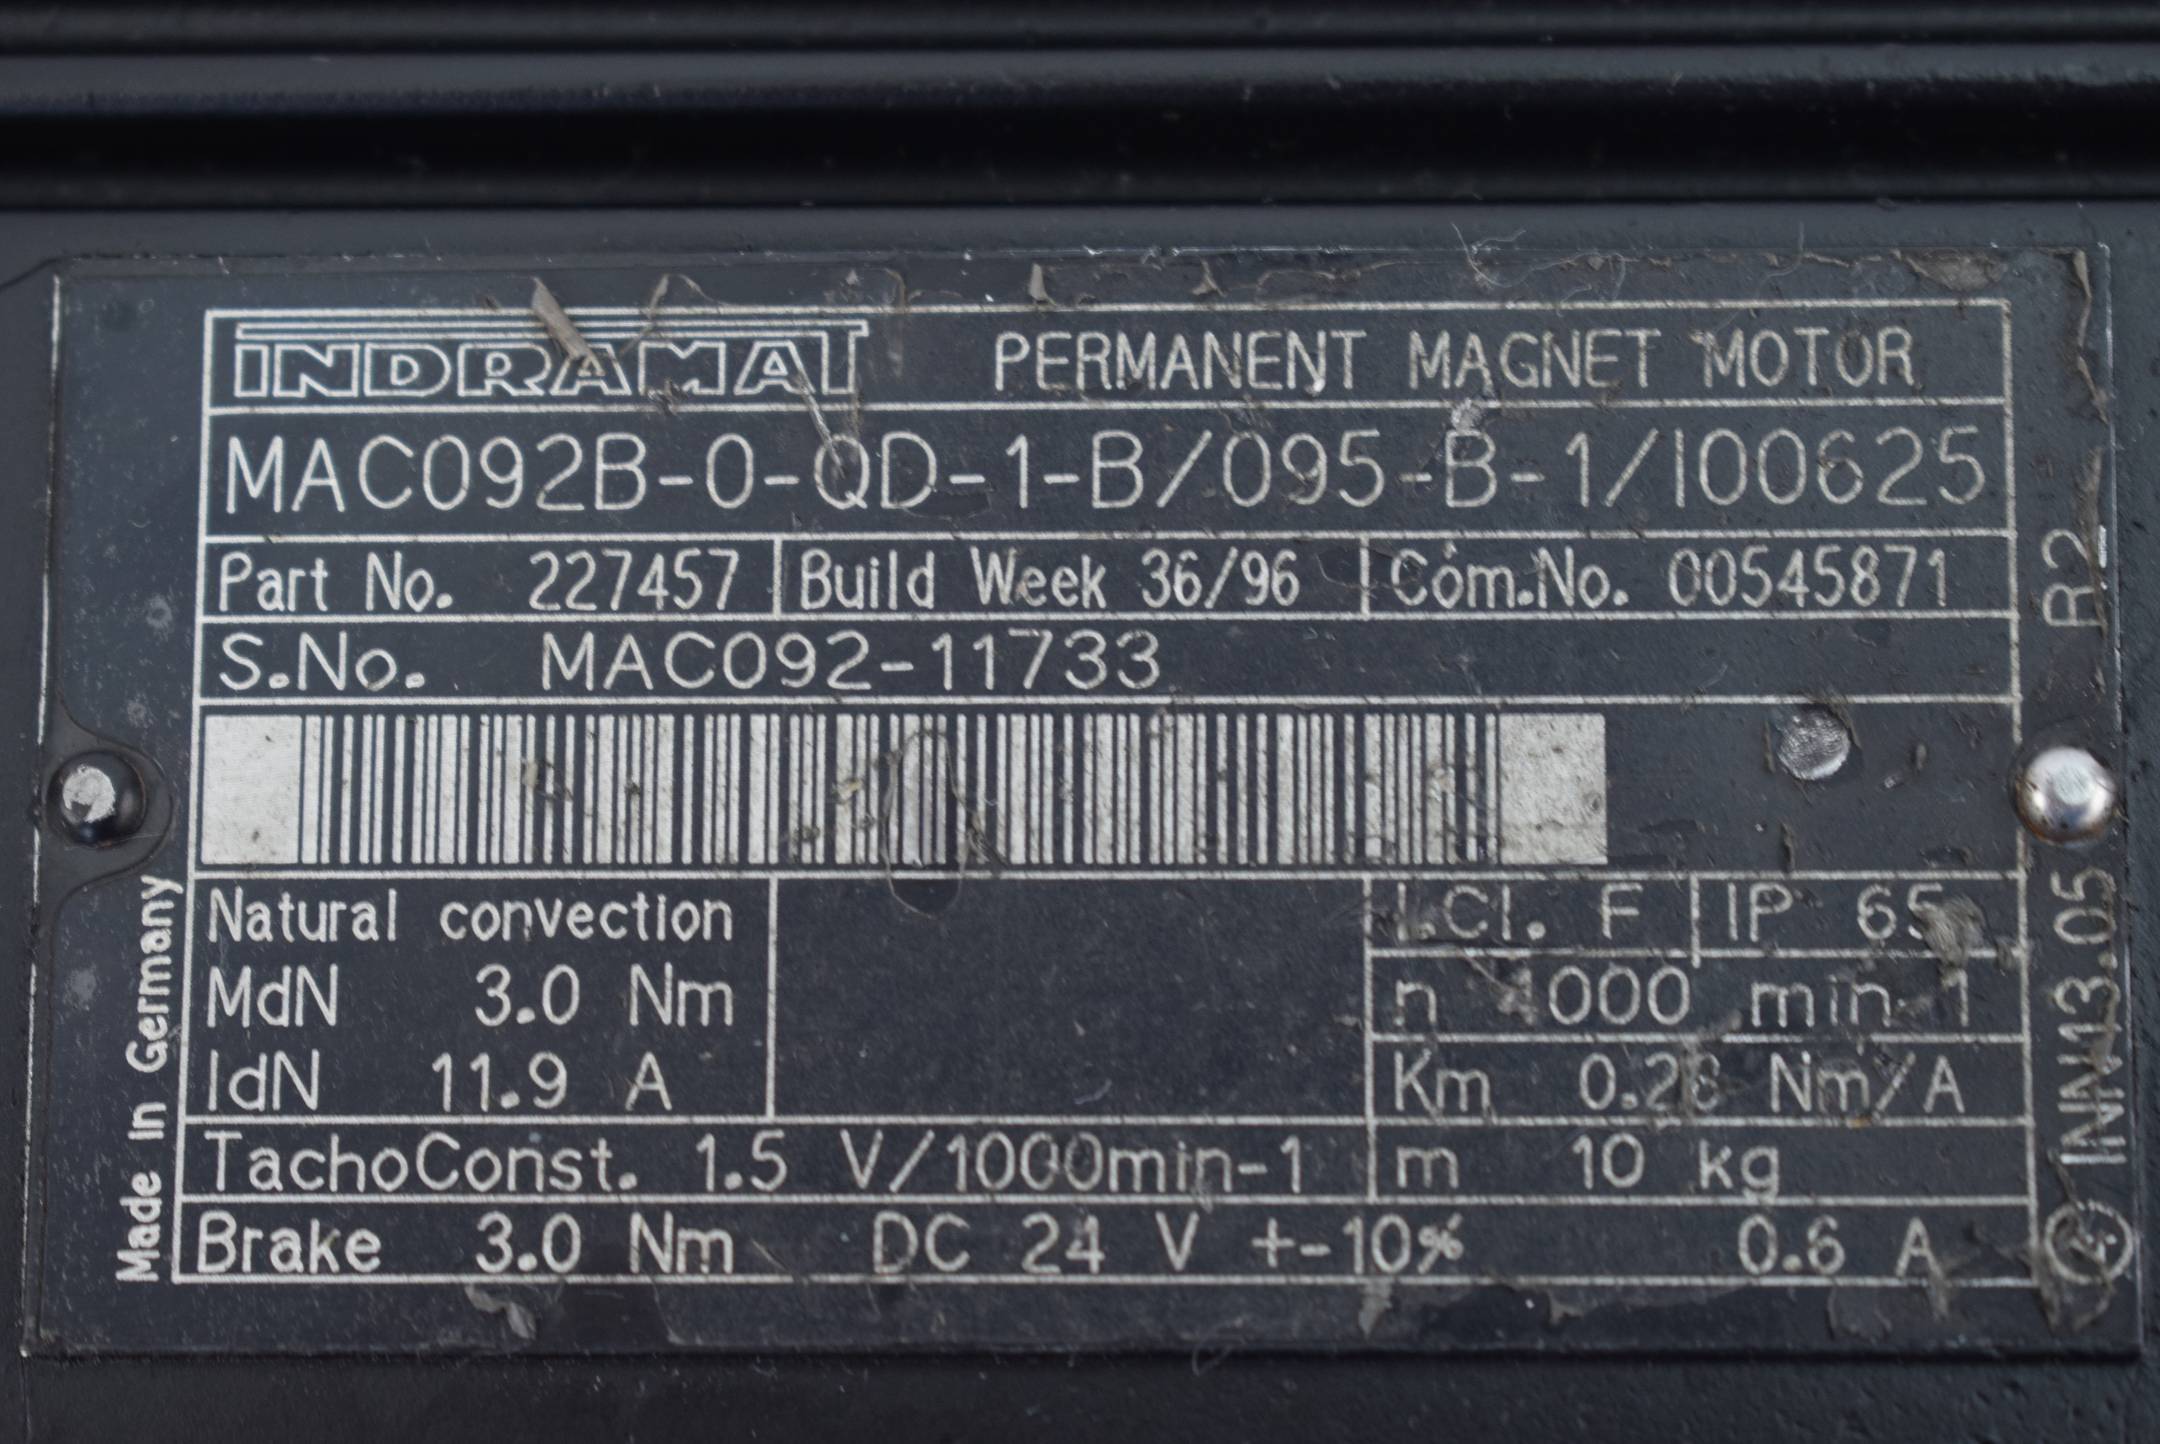 Indramat Permanentmagnetmotor MAC092B-0-QD-1-B/095-B-1/100625